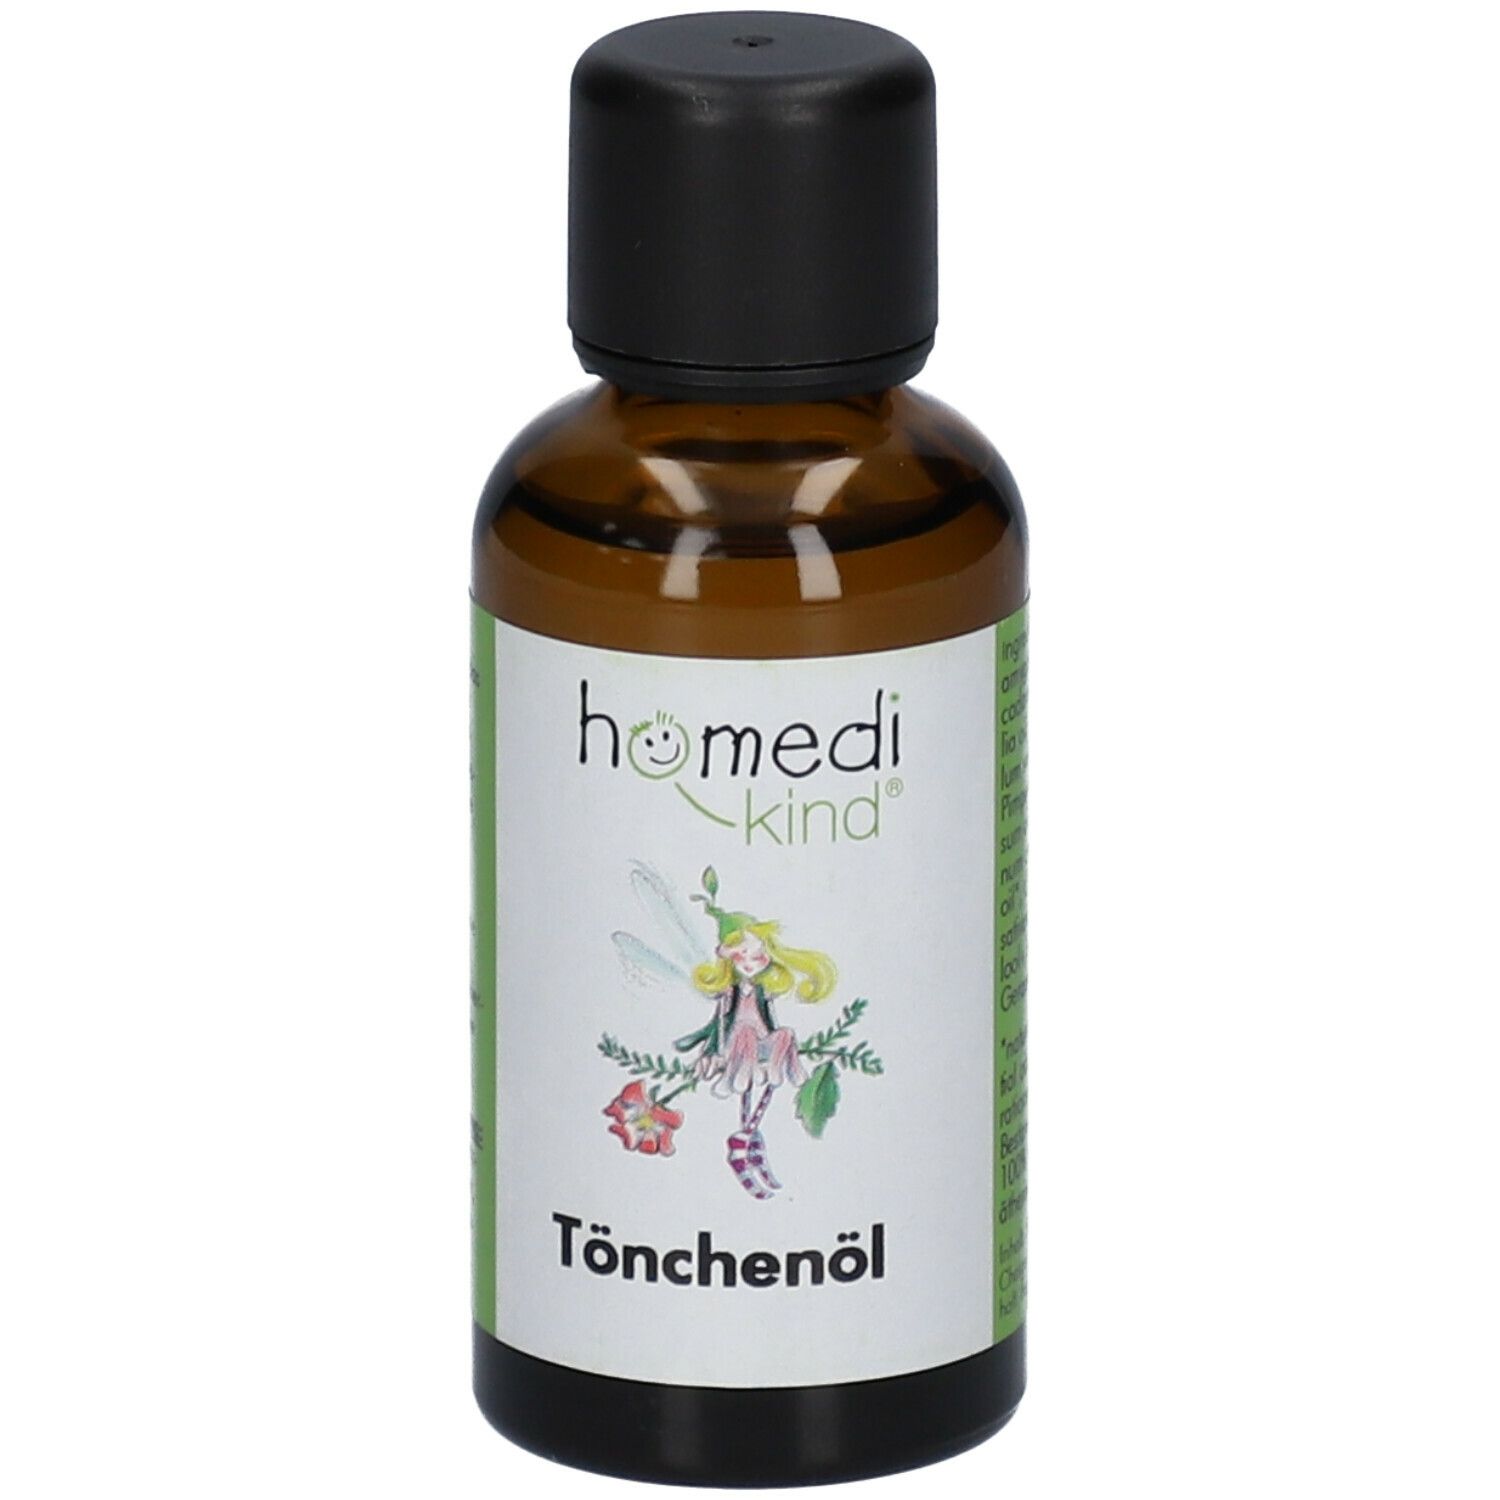 homedi-kind® Tönchenöl